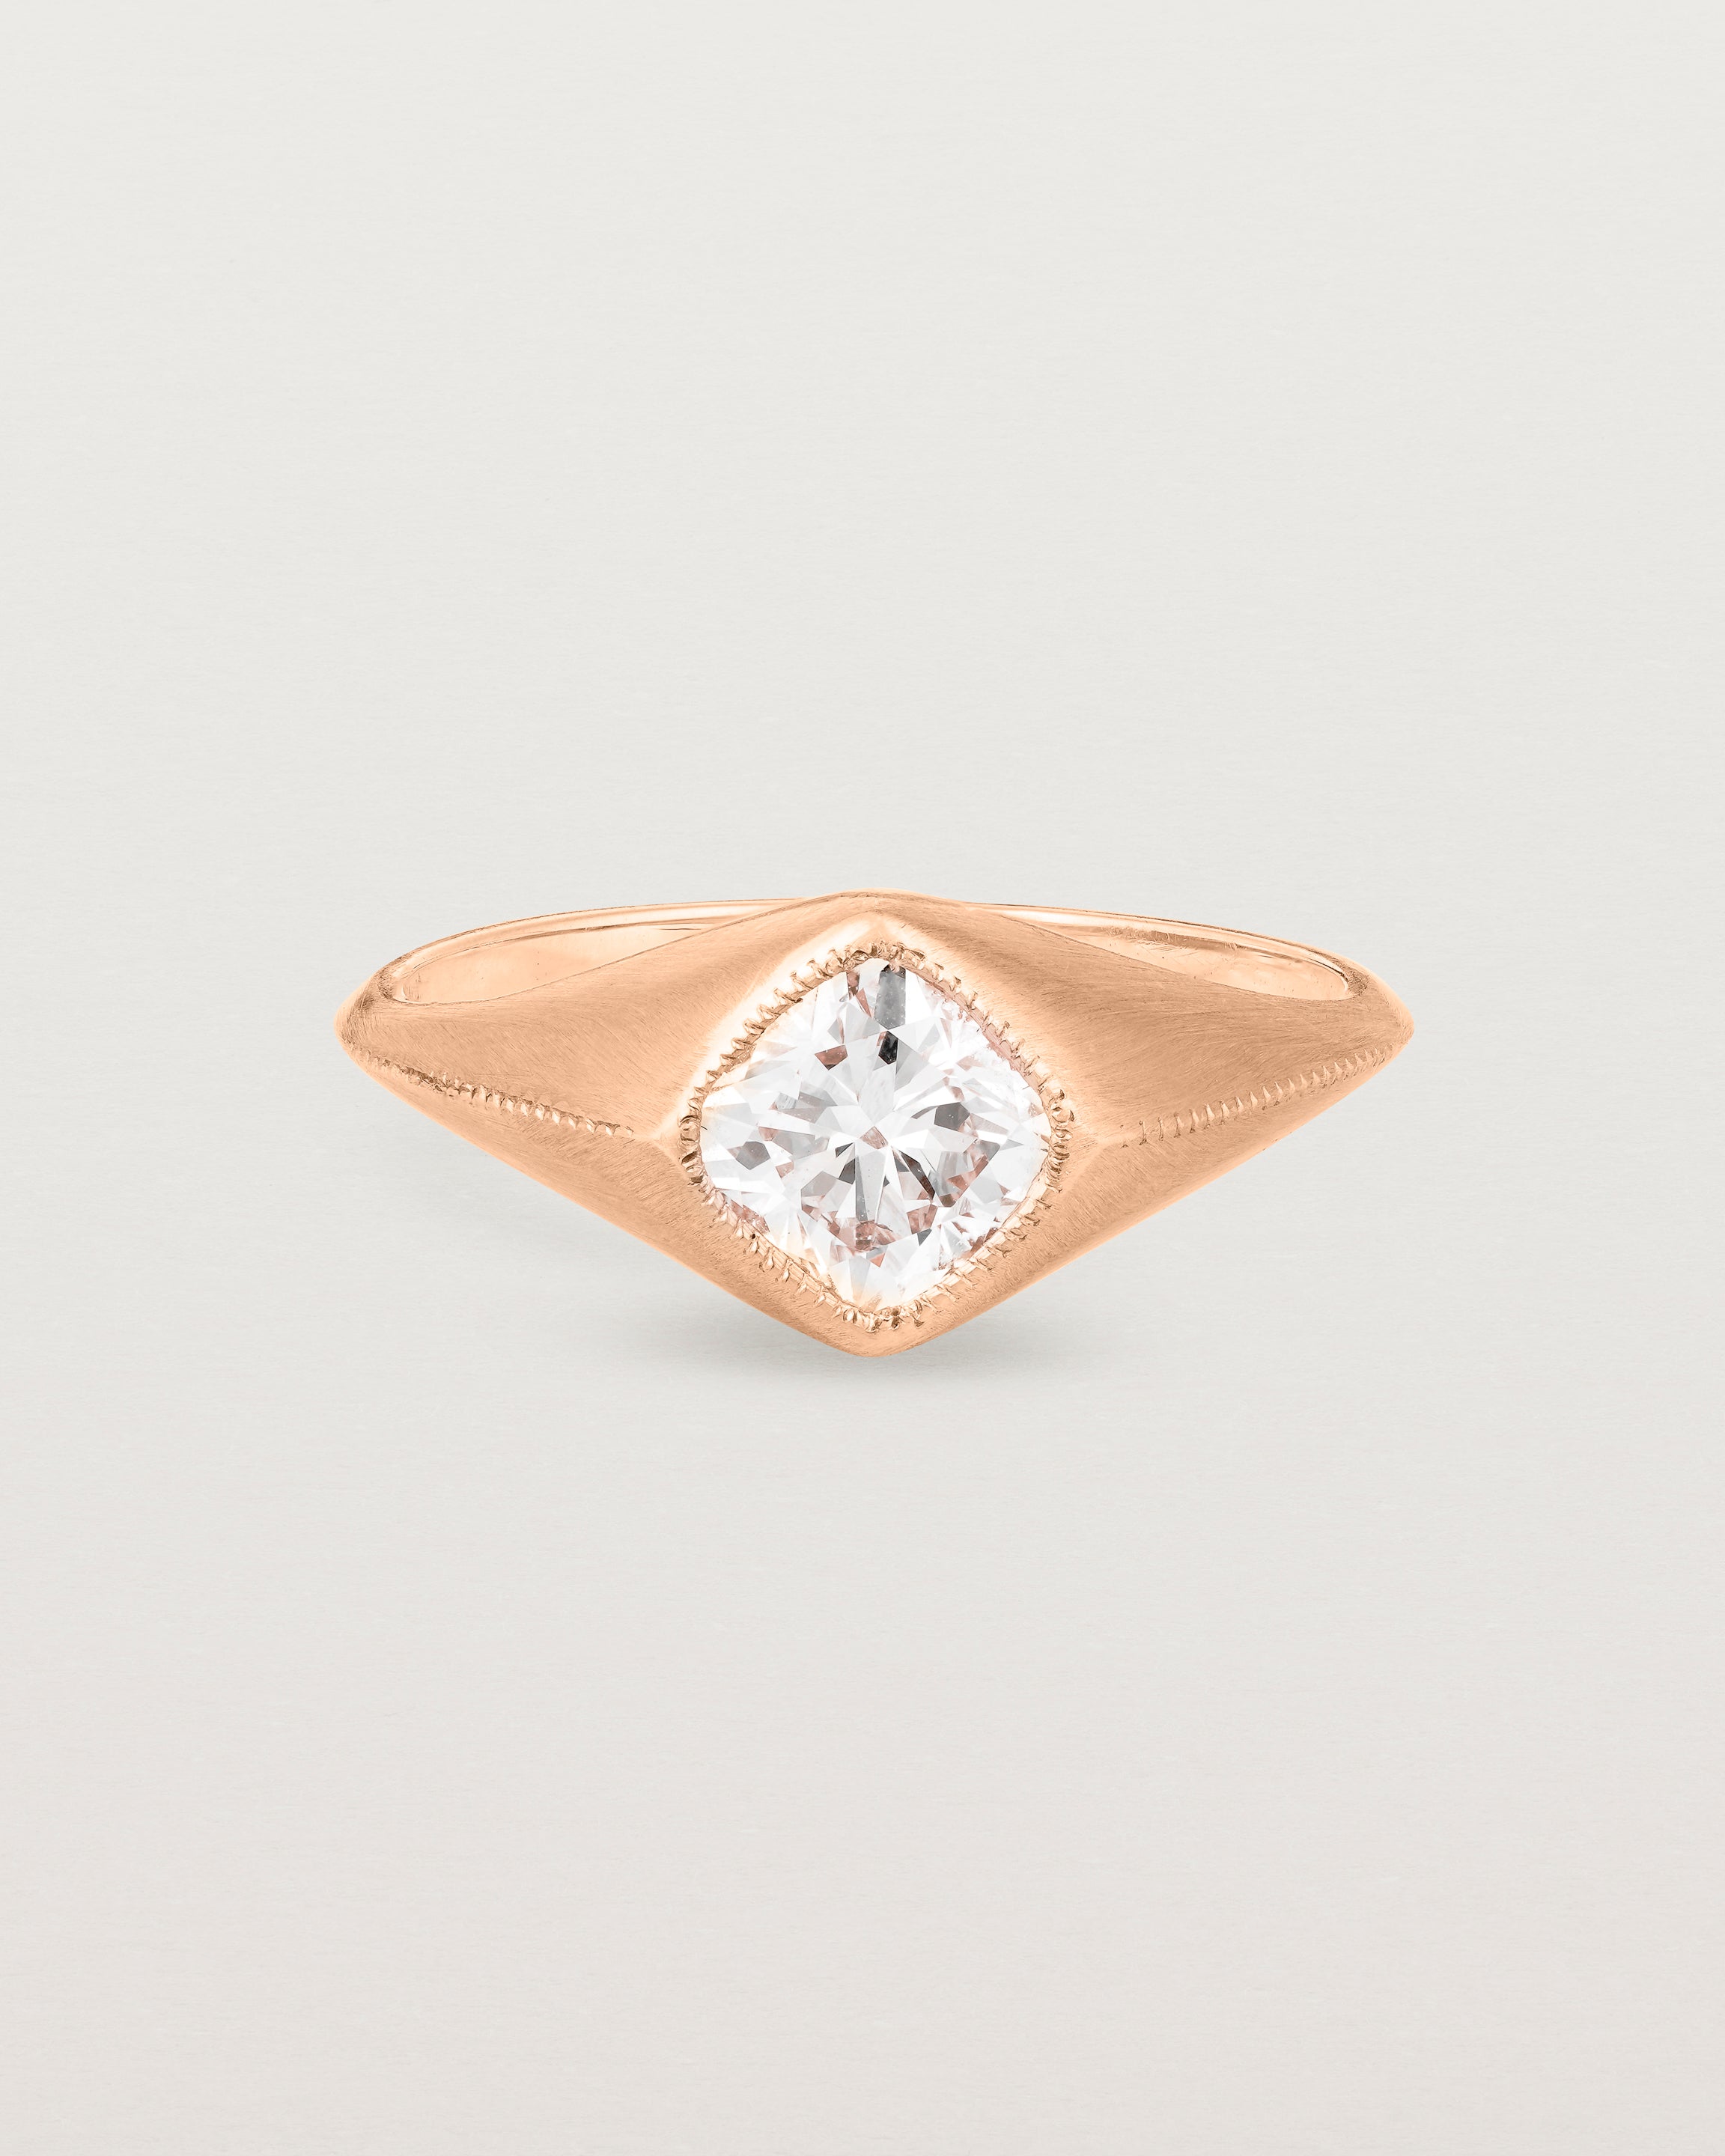 A rose gold Signet Ring featuring a cushion cut white diamond